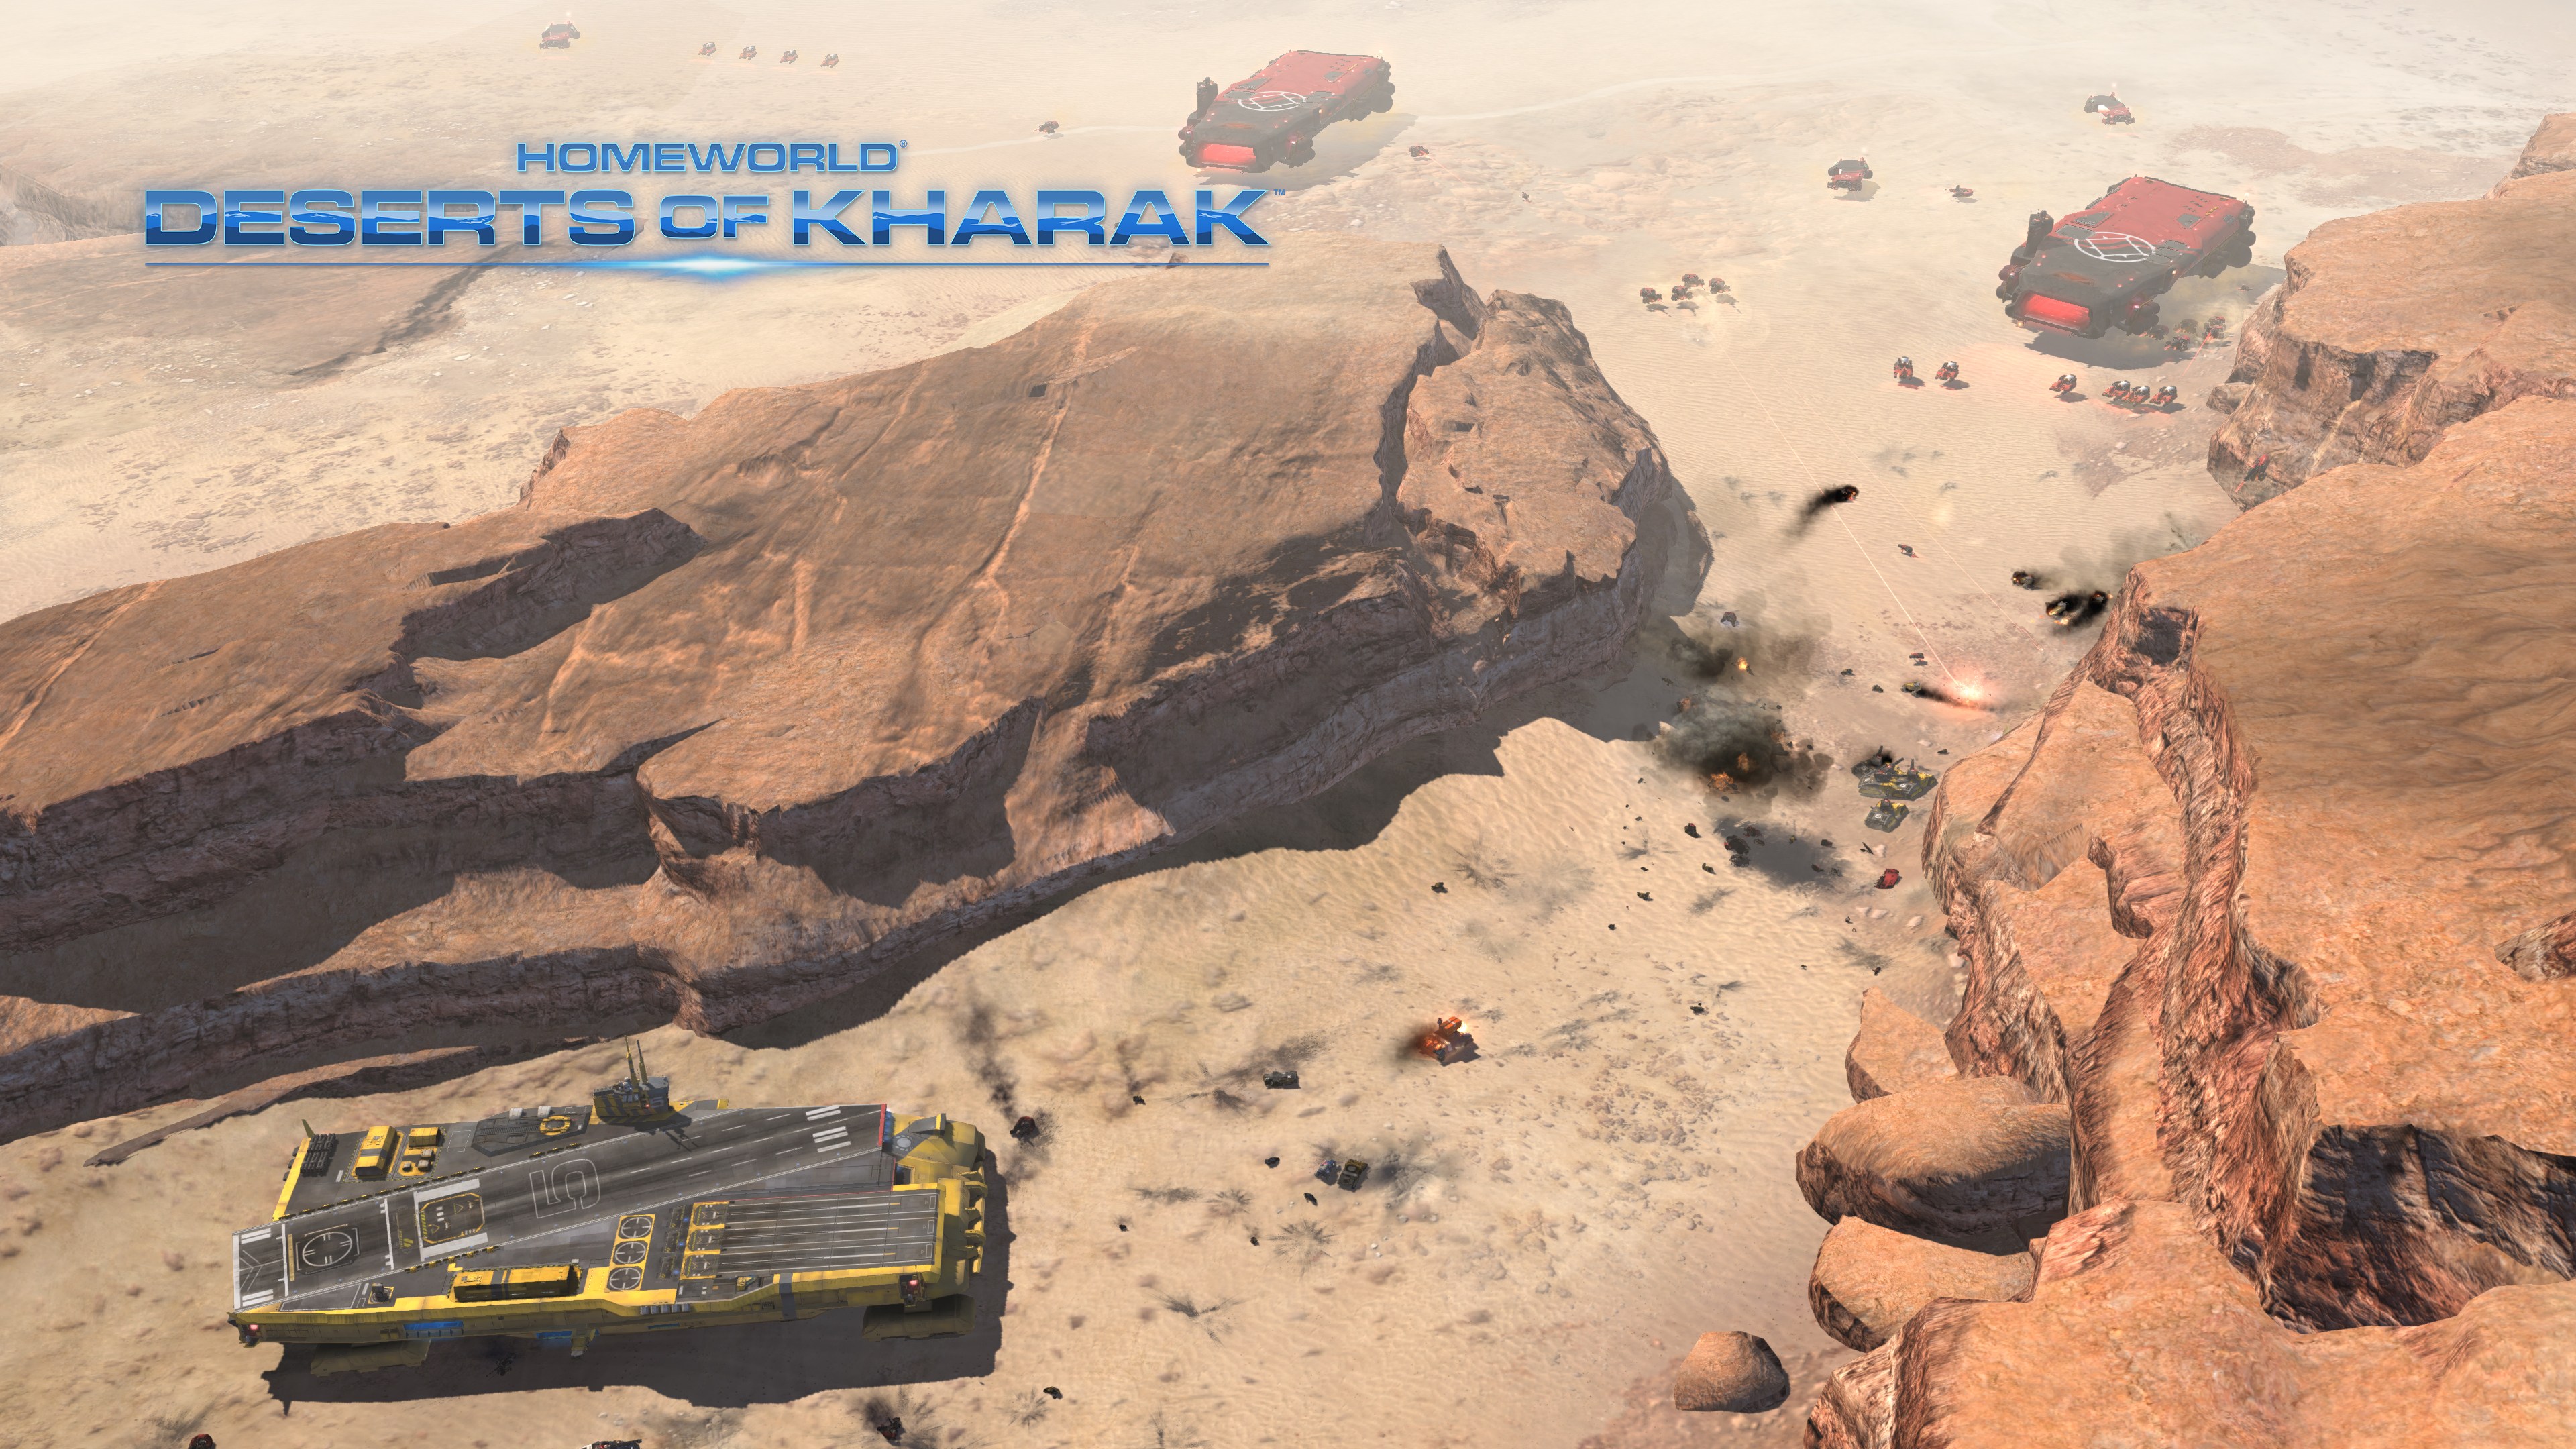 Video Game Homeworld: Deserts of Kharak HD Wallpaper | Background Image